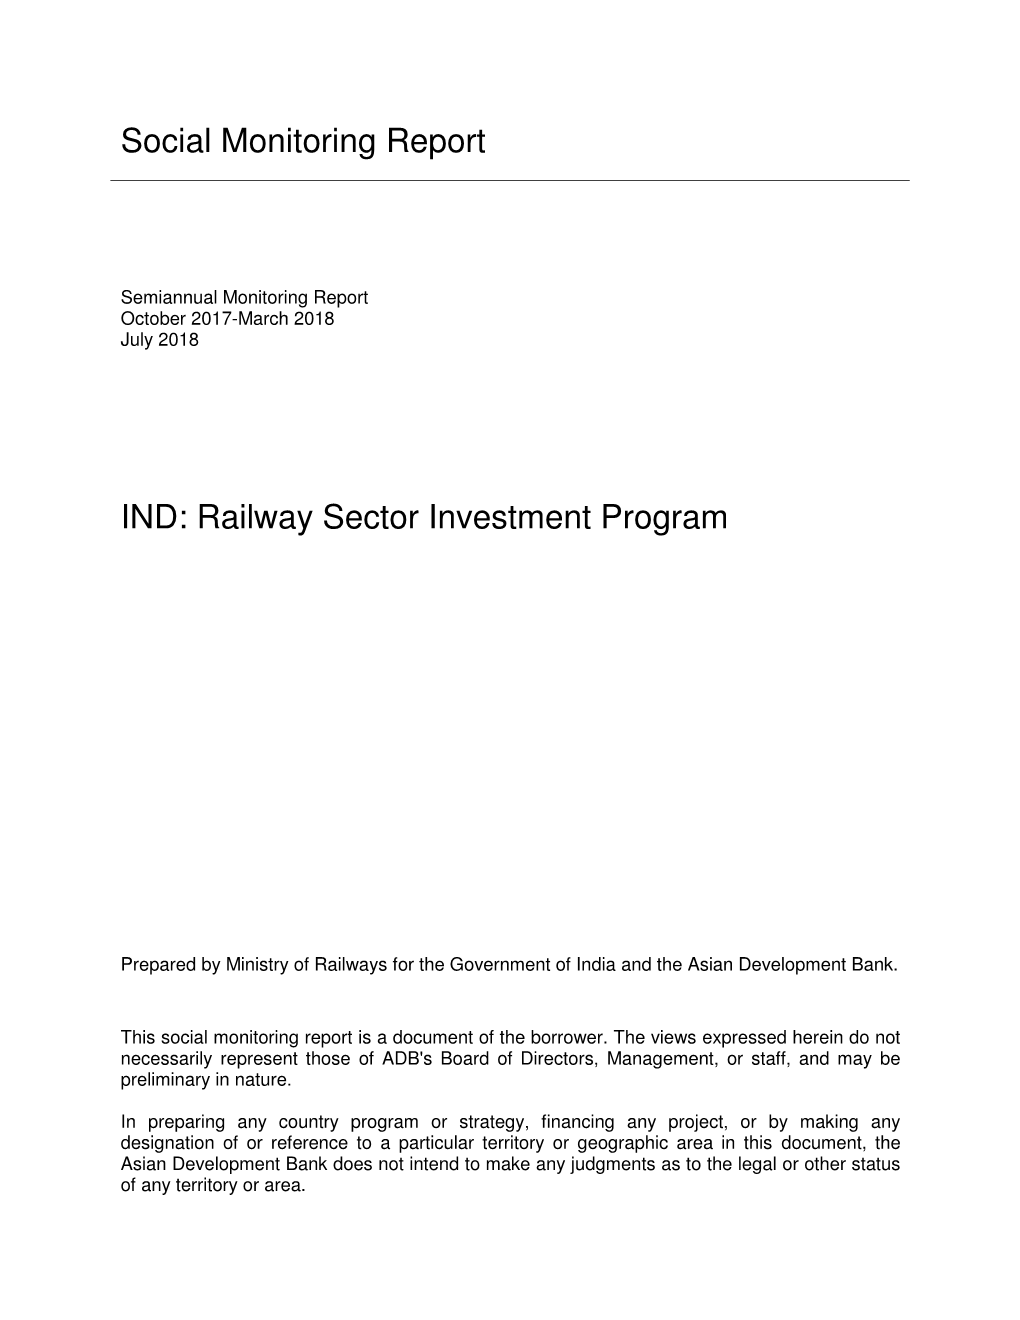 Railway Sector Investment Program